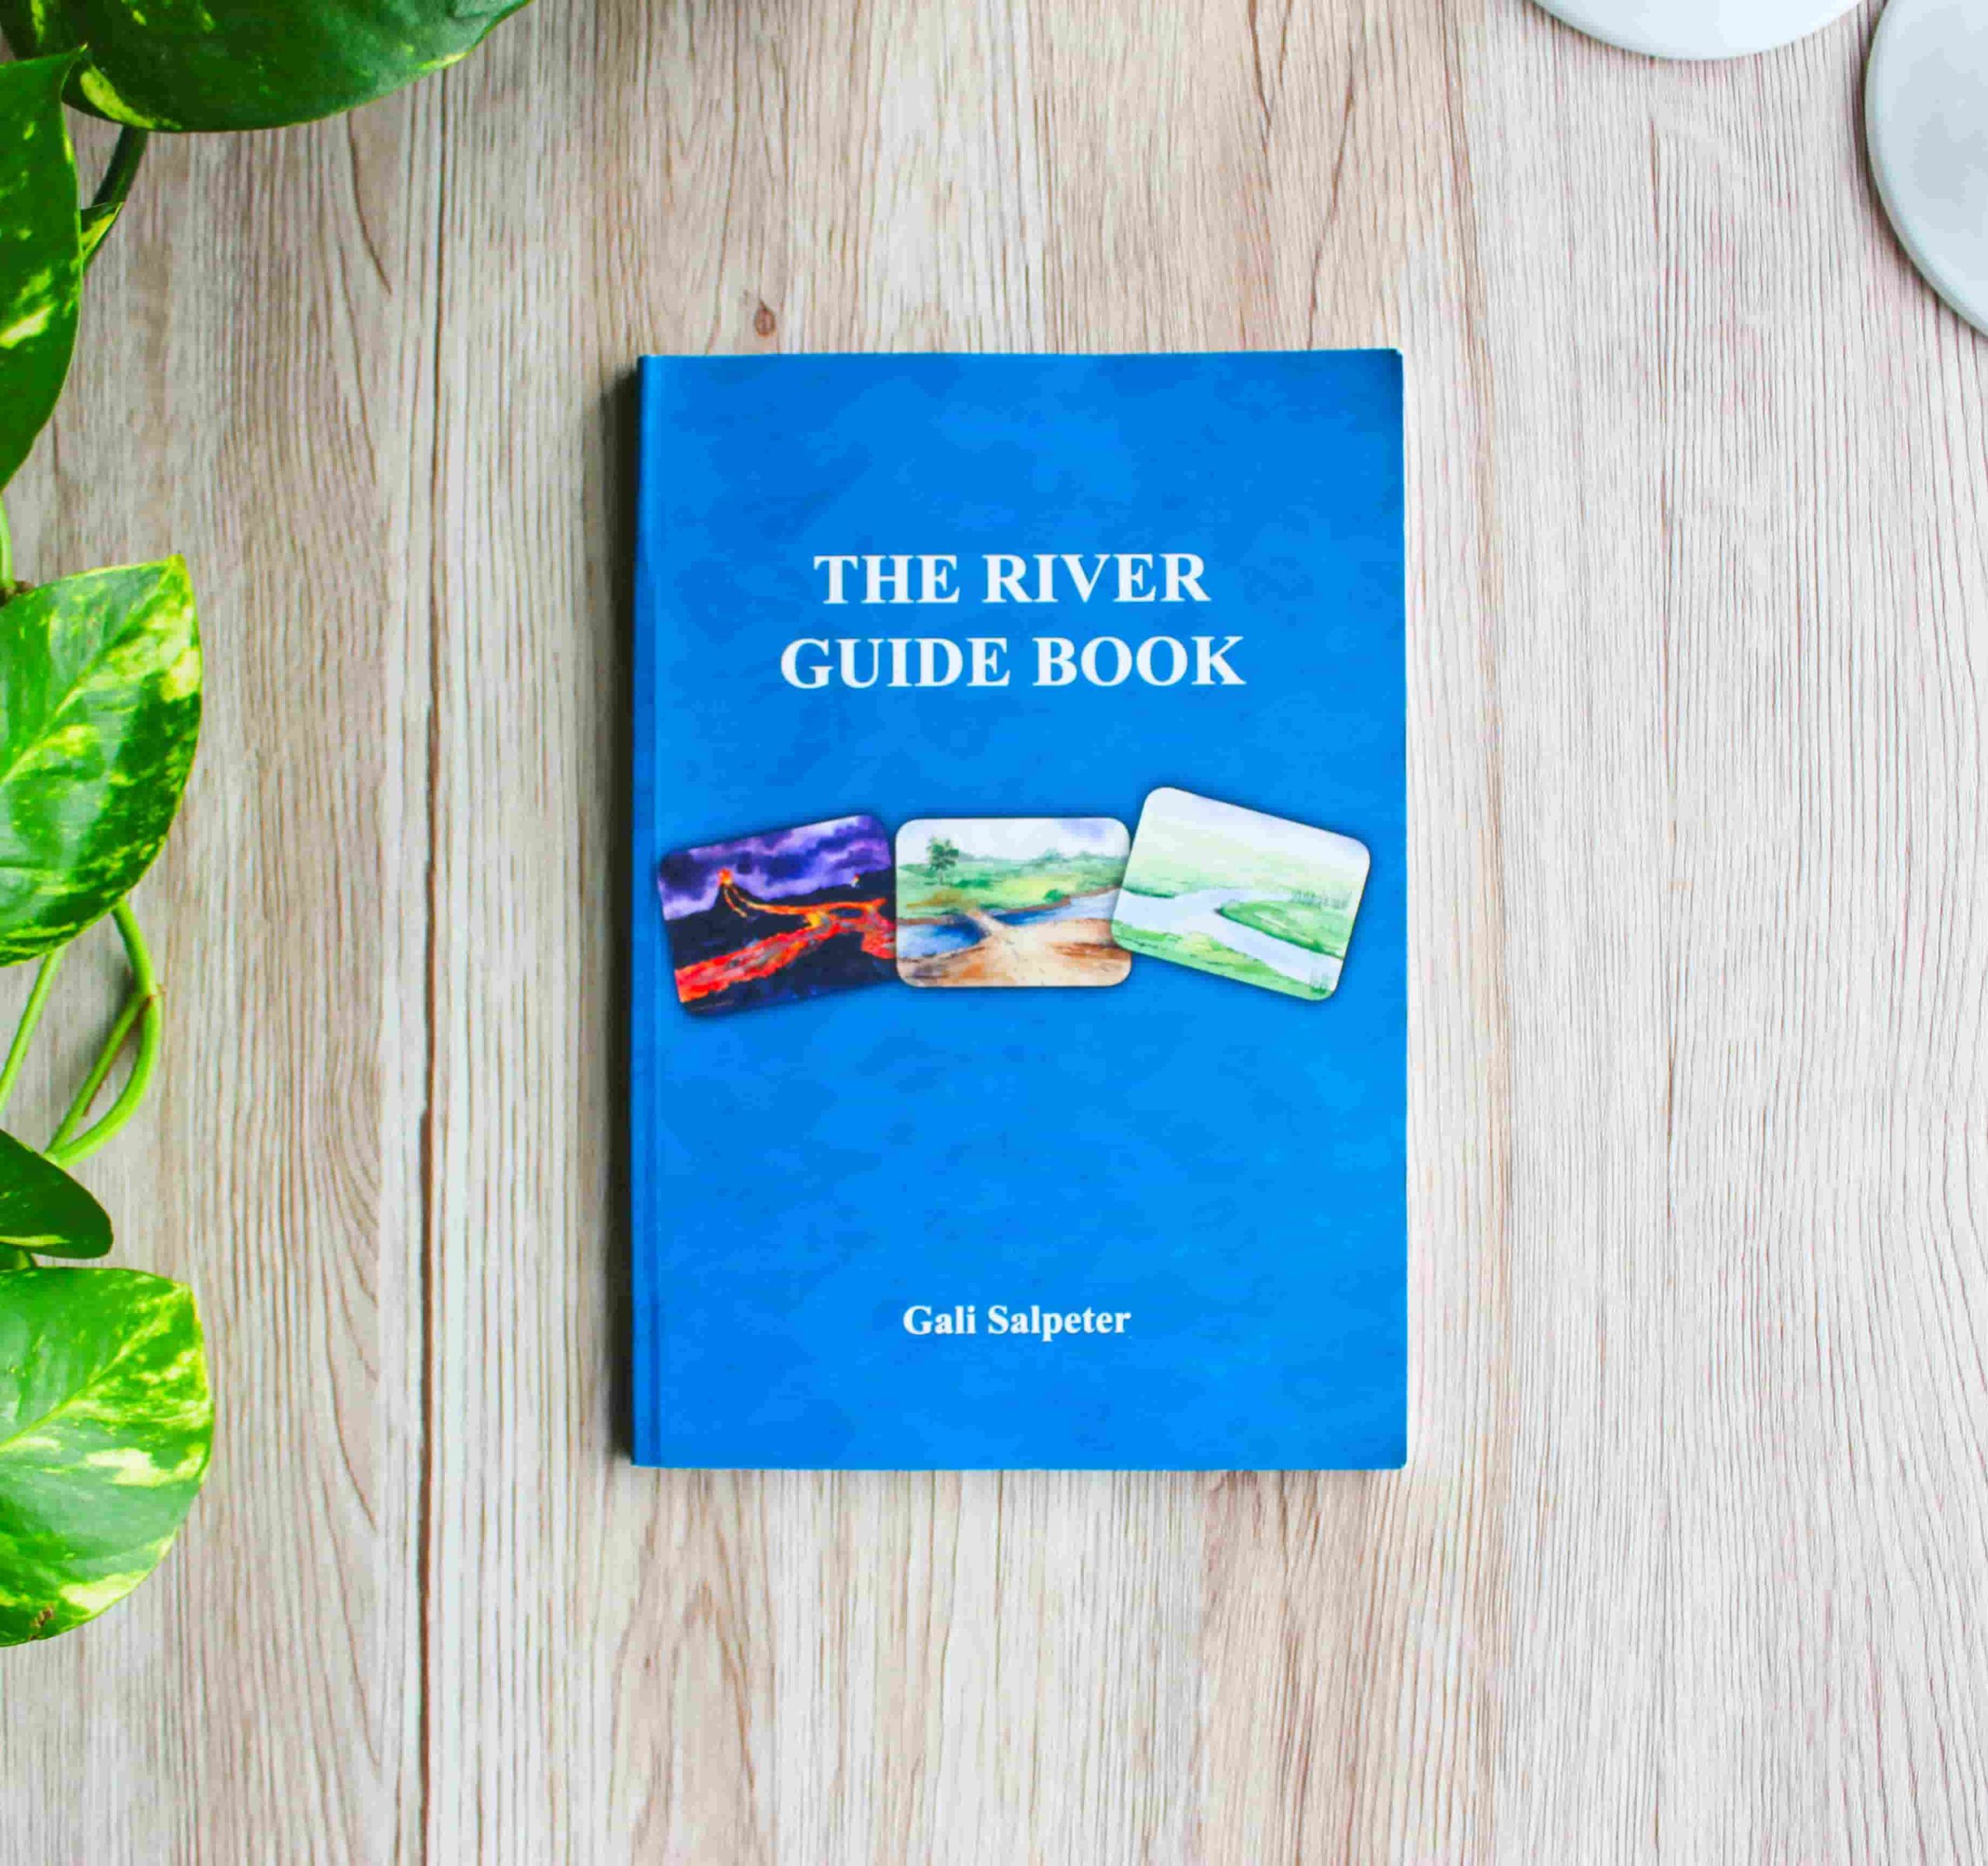 The river guide book